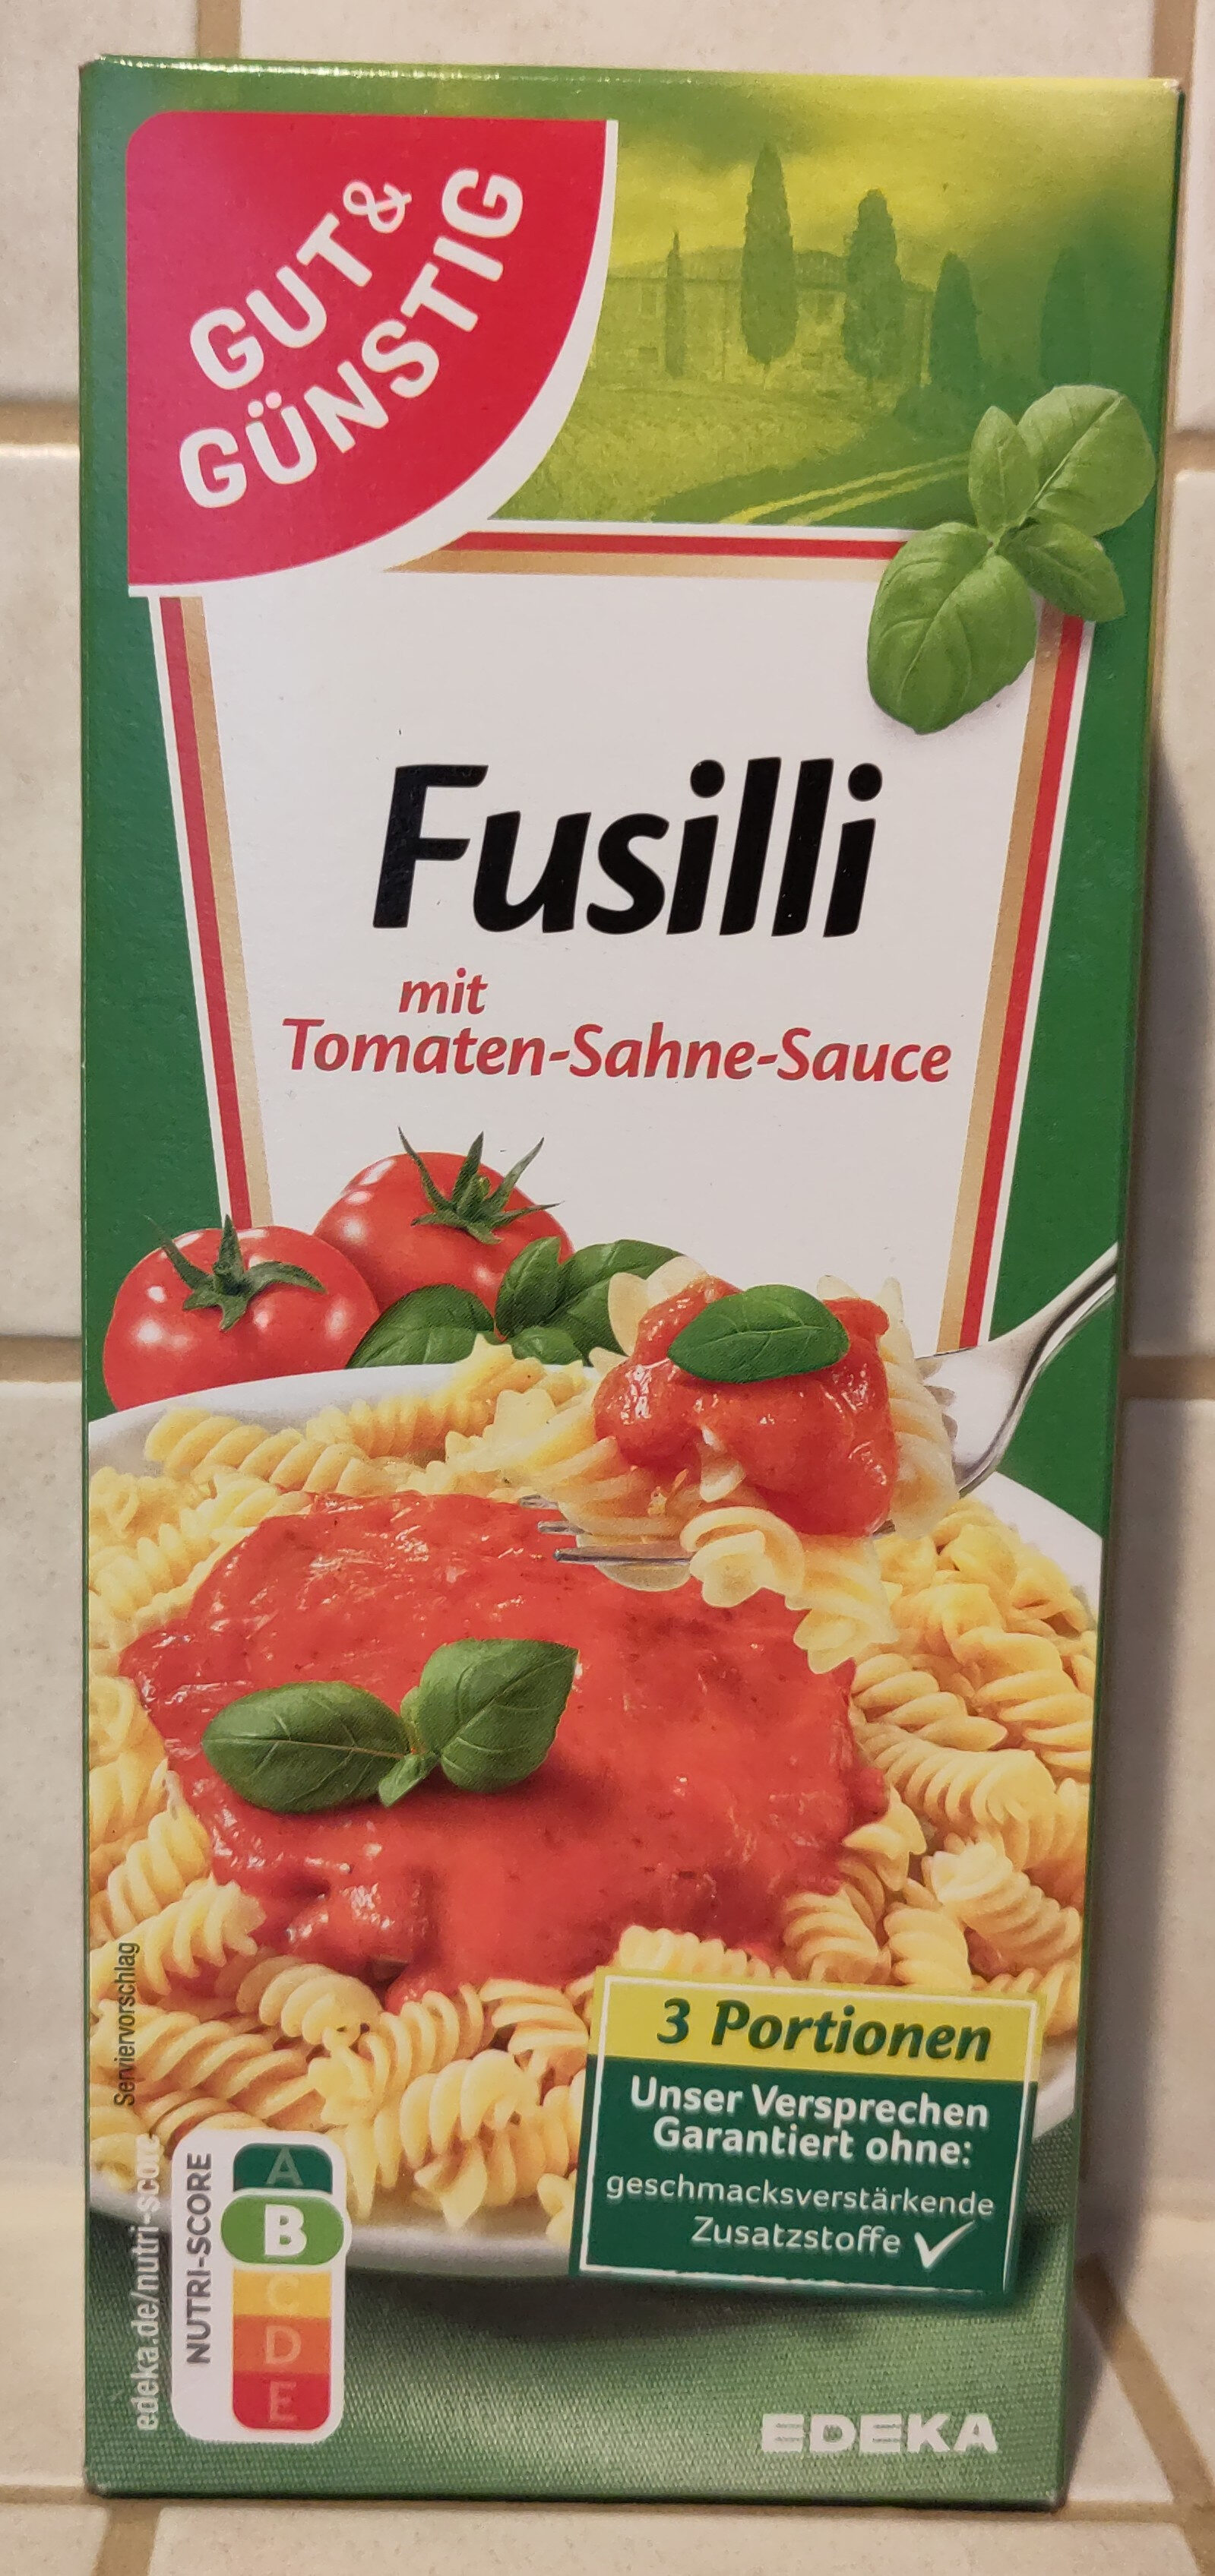 Gut & Günstig Fusilli mit Tomaten-Sahne-Sauce - Produkt - de